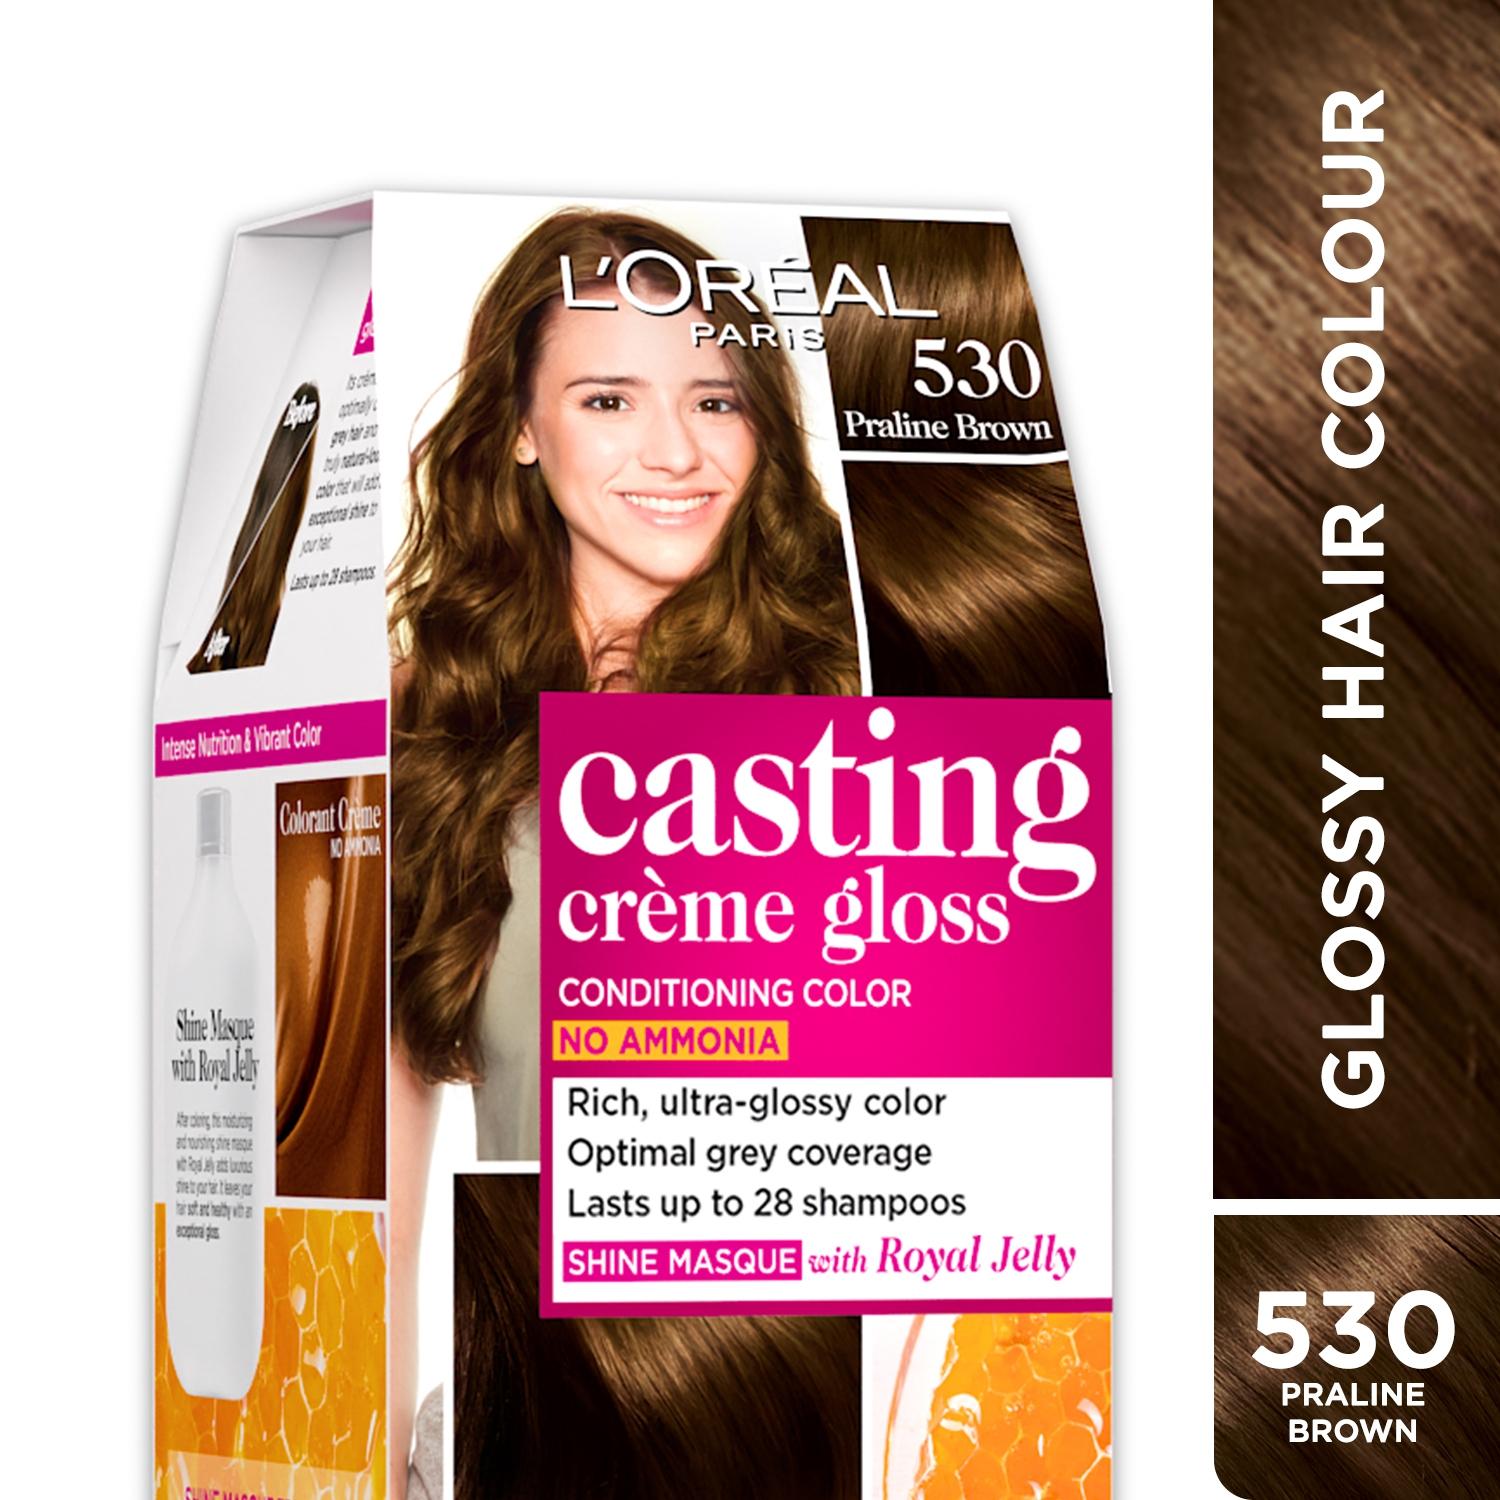 l'oreal-paris-casting-creme-gloss-hair-color---530-praline-brown-(87.5g+72ml)